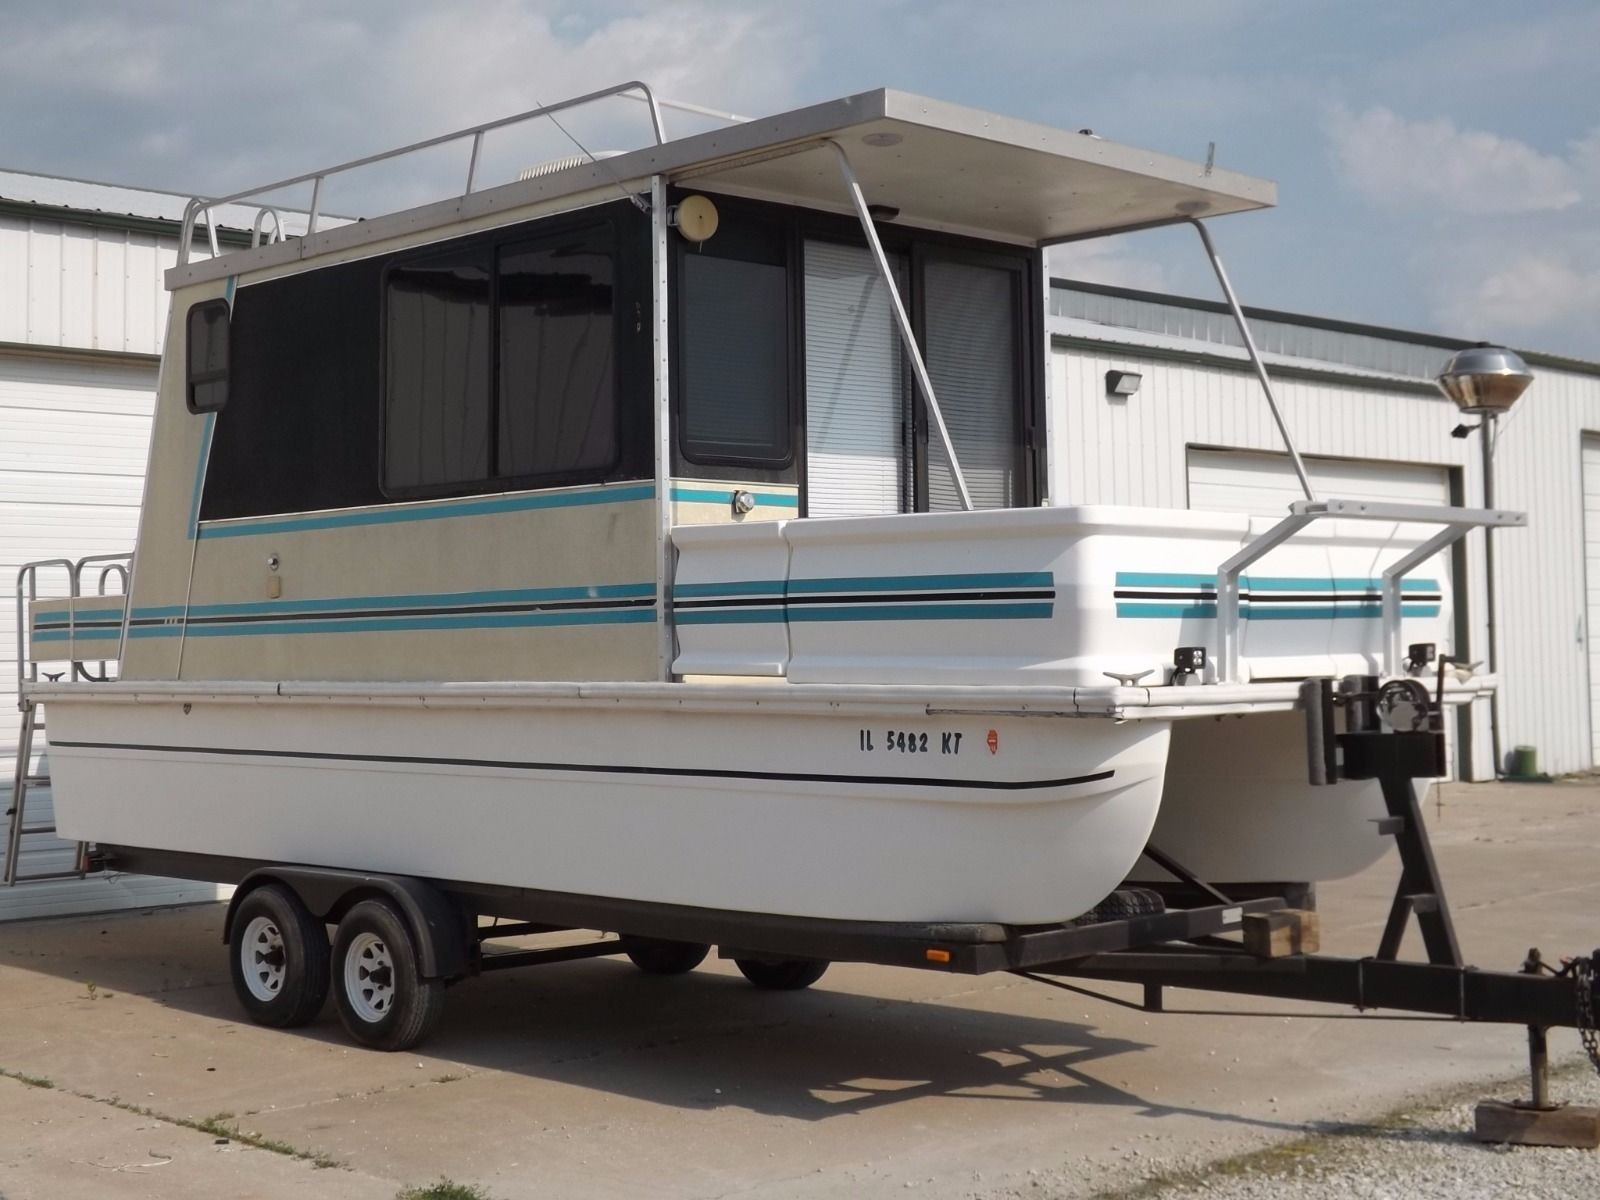 26 ft catamaran trailer for sale